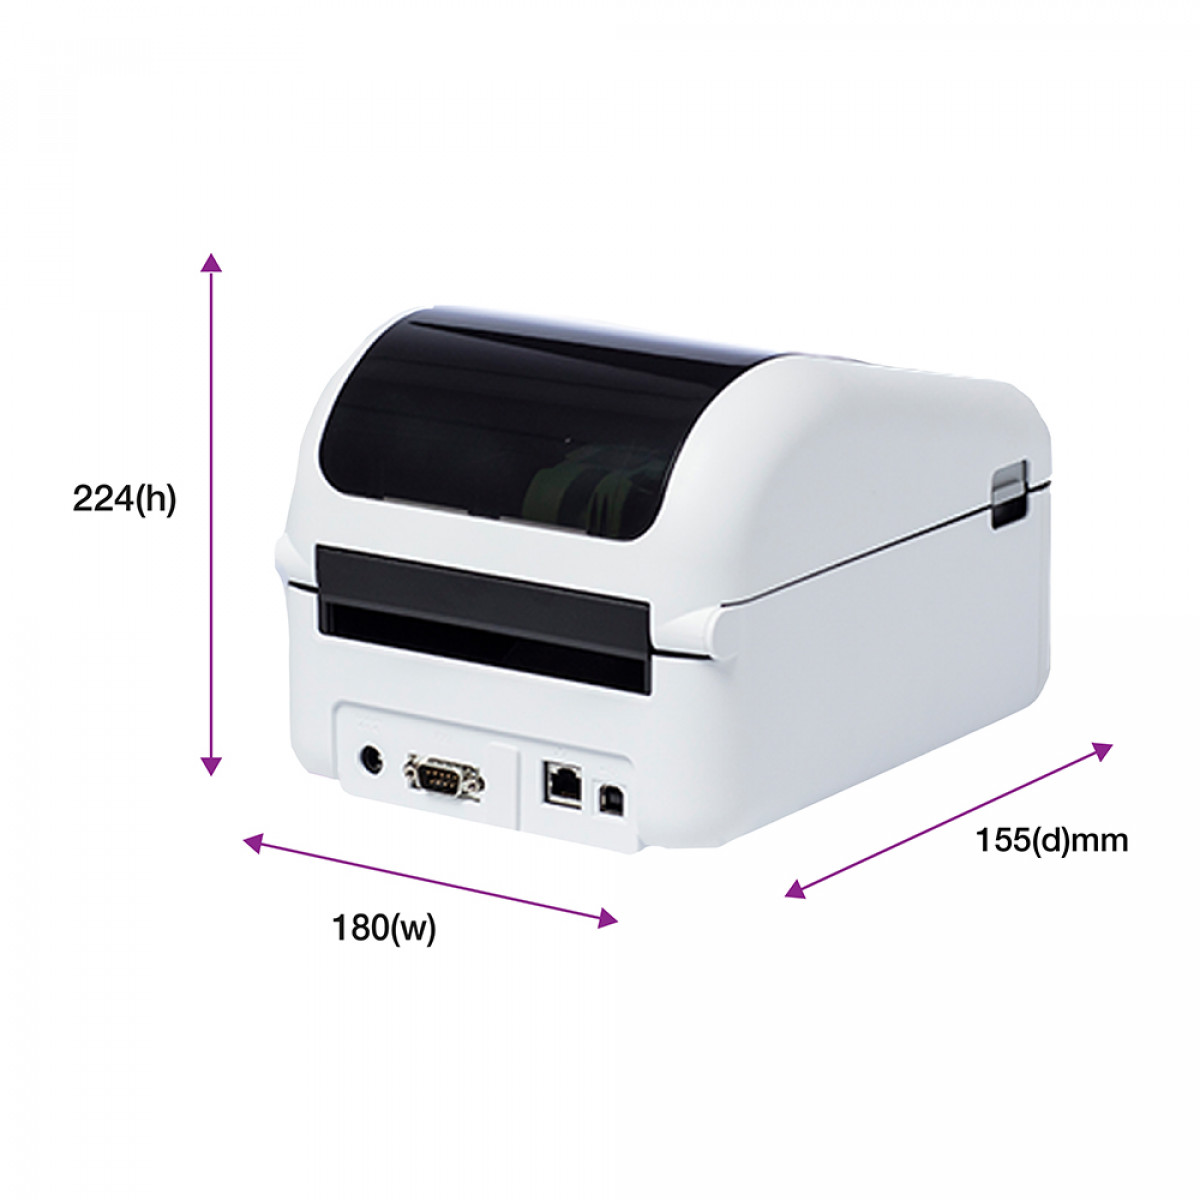 TD-4210D printer dimensions